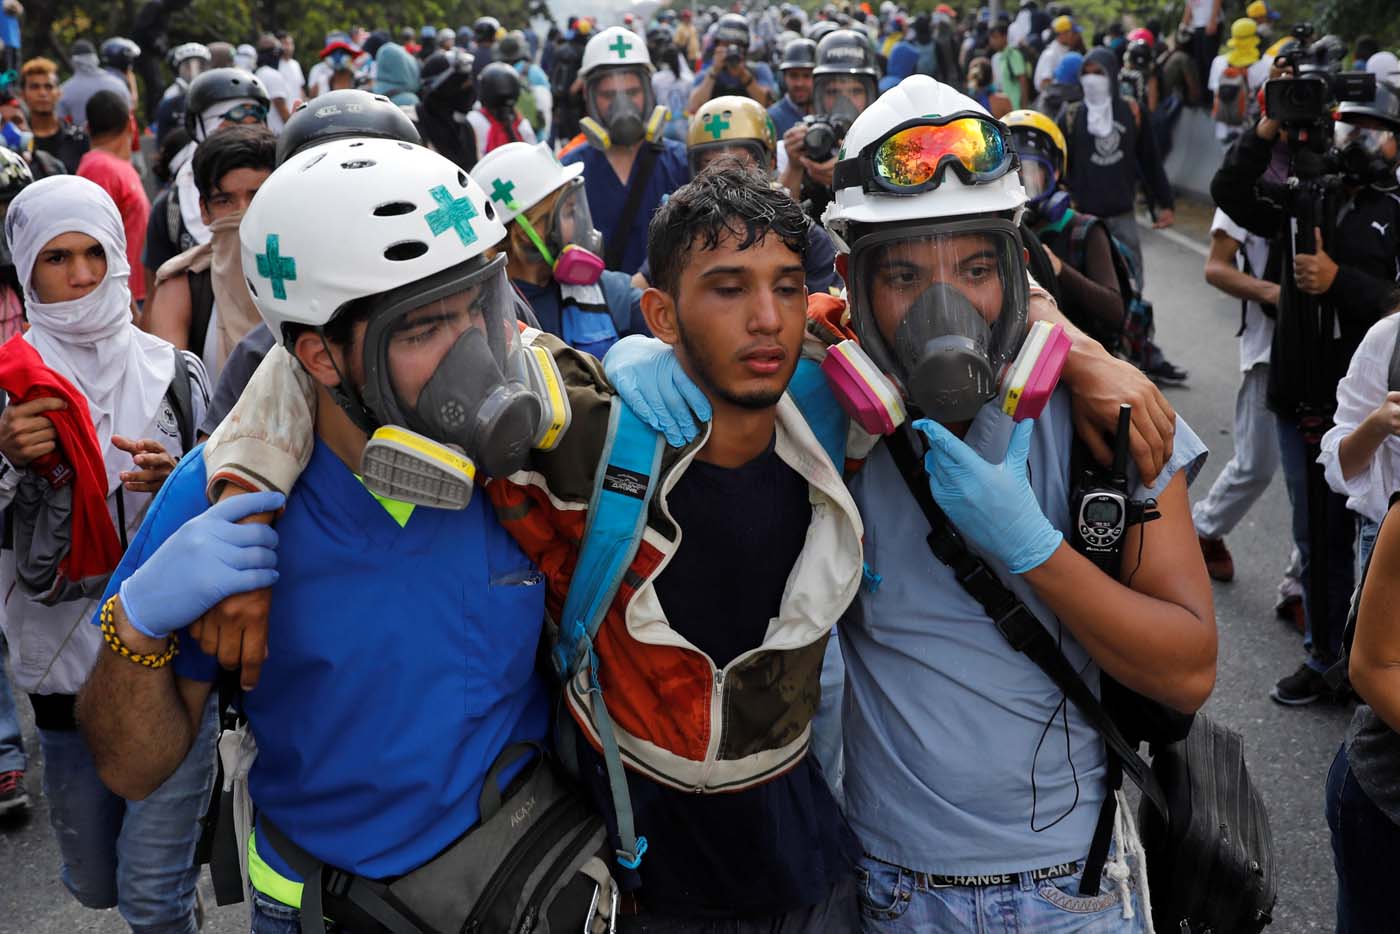 Volunteers help an injured demonstrator (C) during a rally against Venezuela's President Nicolas Maduro in Caracas, Venezuela April 24, 2017. Picture taken April 24, 2017. REUTERS/Carlos Garcia Rawlins